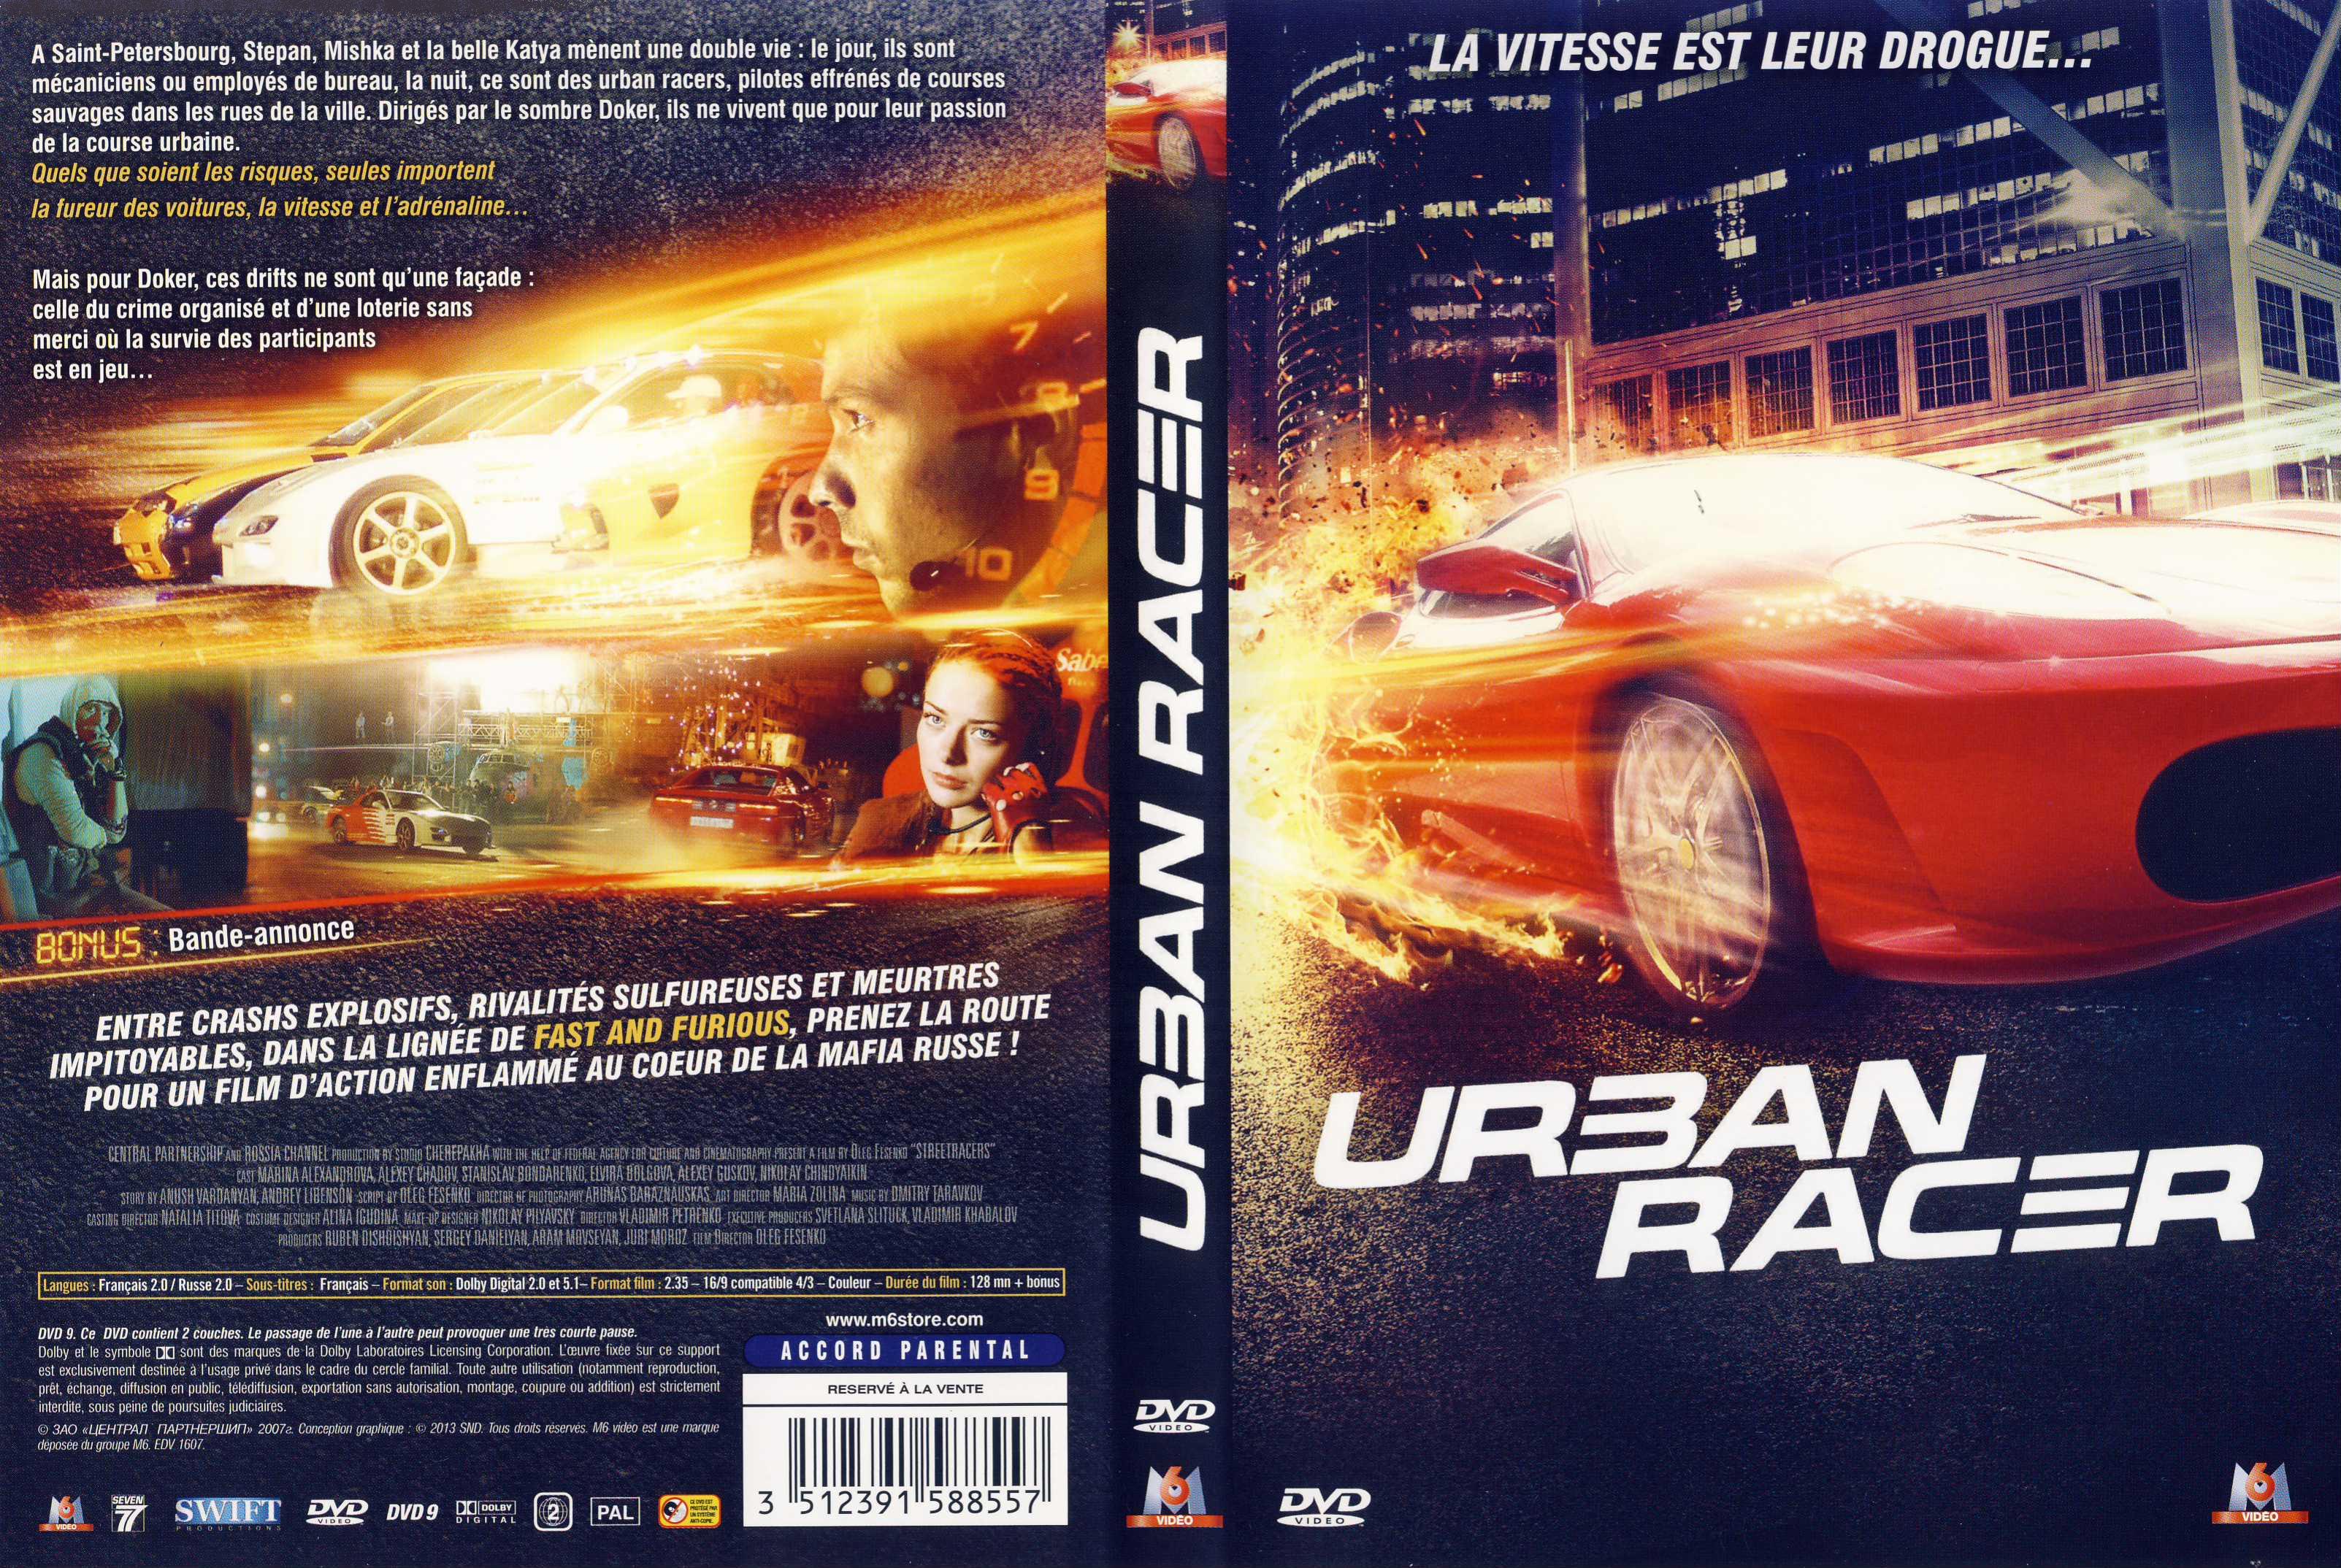 Jaquette DVD Urban Racer